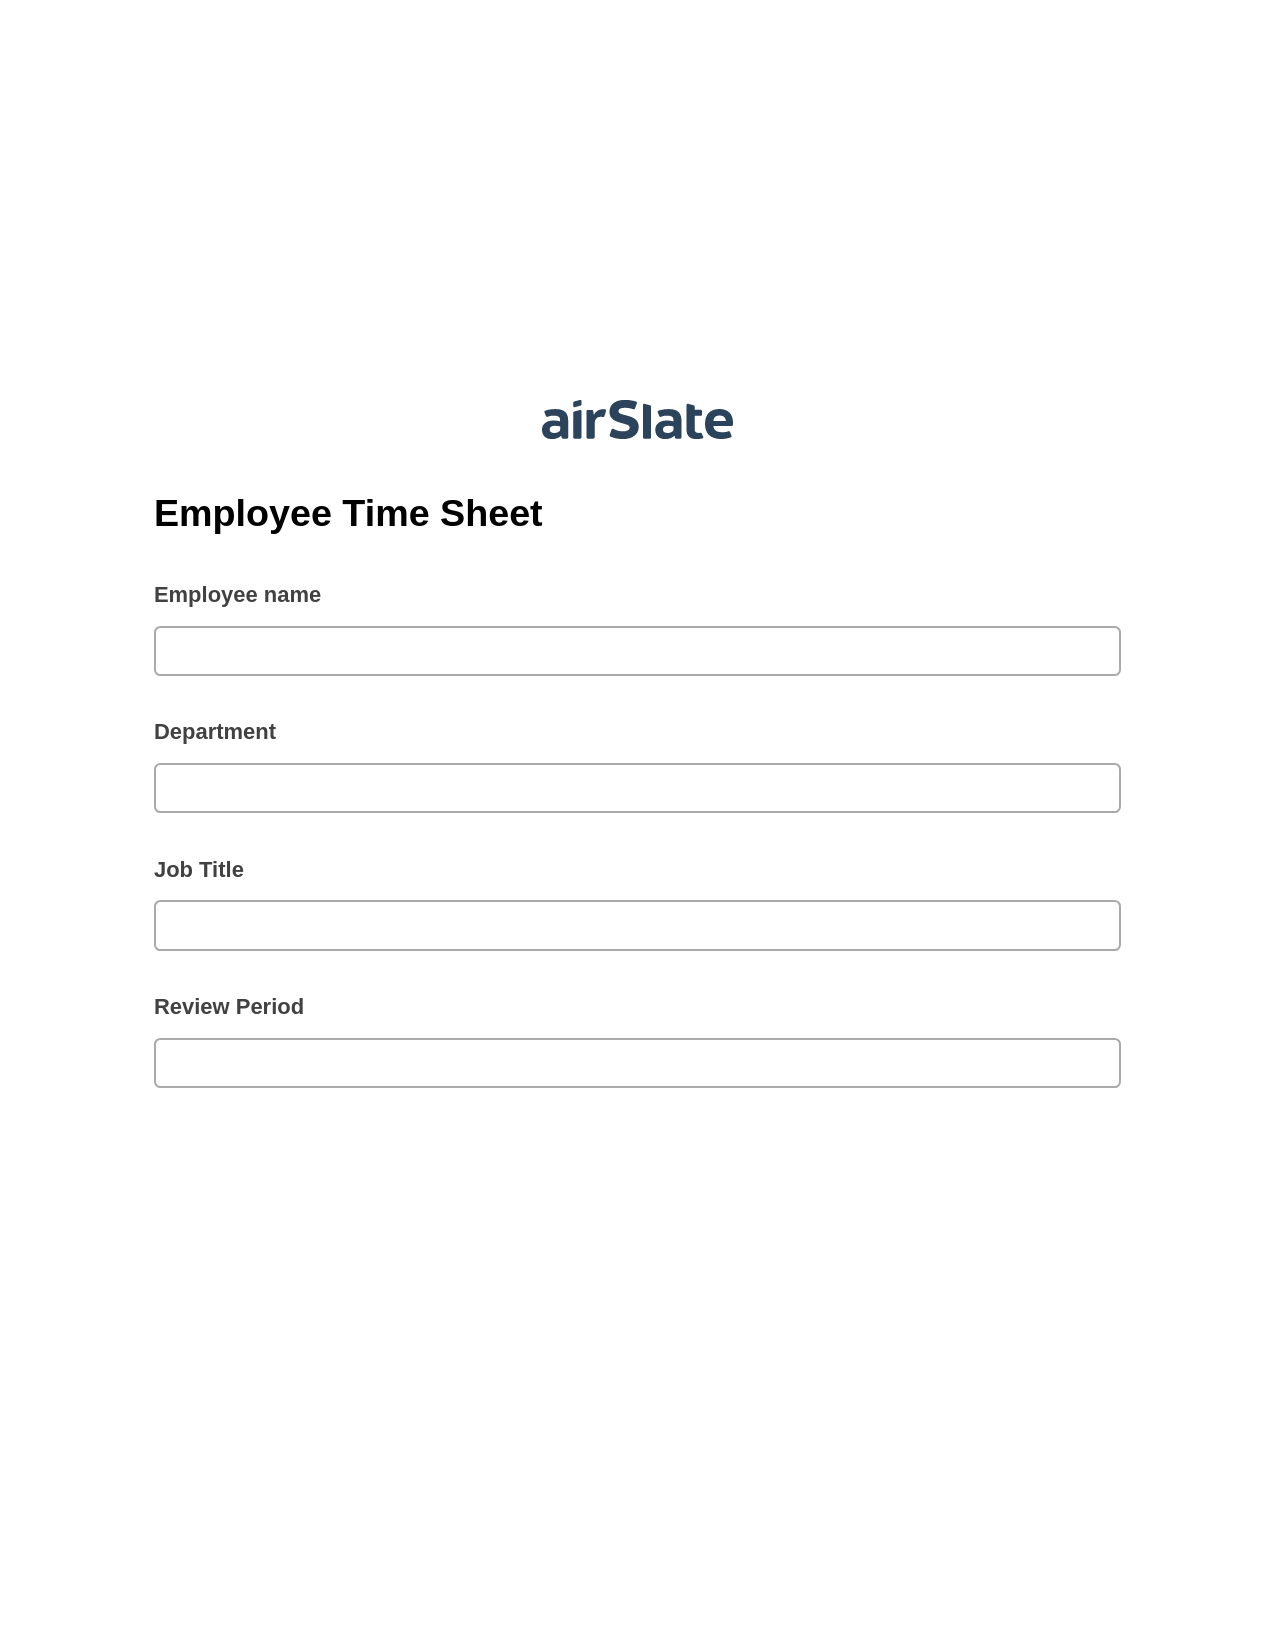 Multirole Employee Time Sheet Pre-fill from Smartsheet Bot, Update Audit Trail Bot, Export to Google Sheet Bot